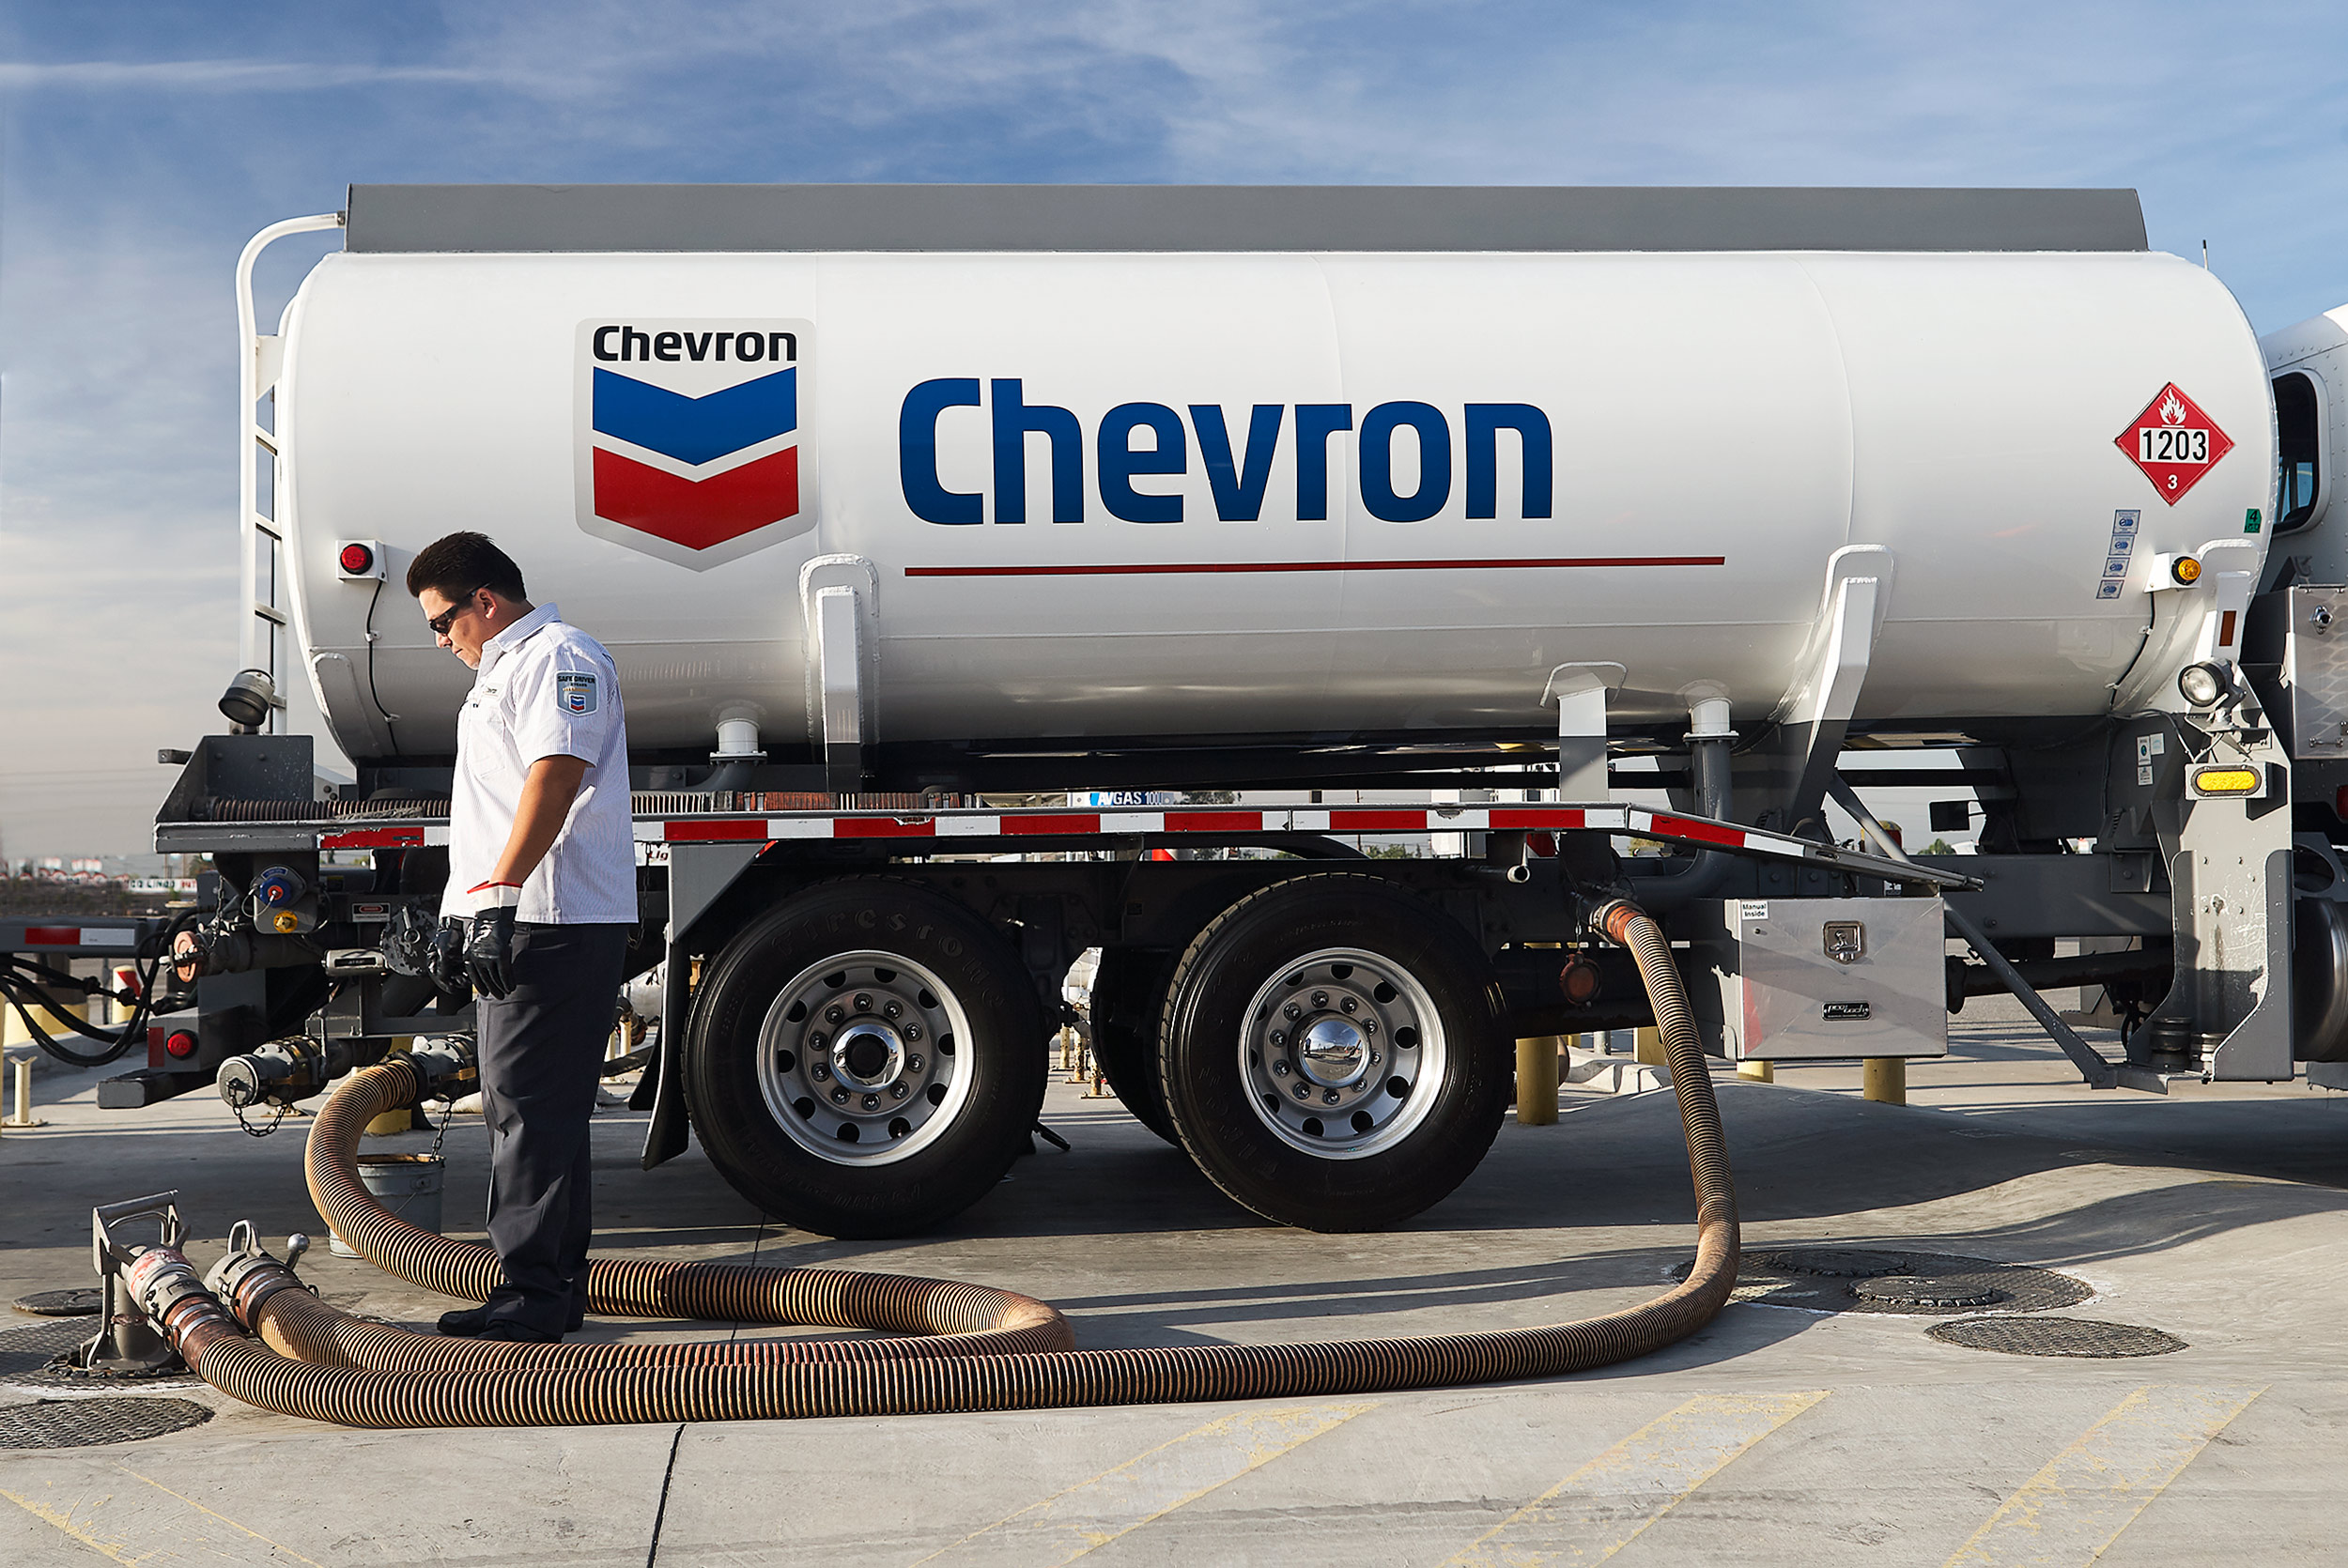 Chevron Aviation driver - Steve Craft Photography, Phoenix, Arizona based Commercial, Advertising & Aviation Photographer